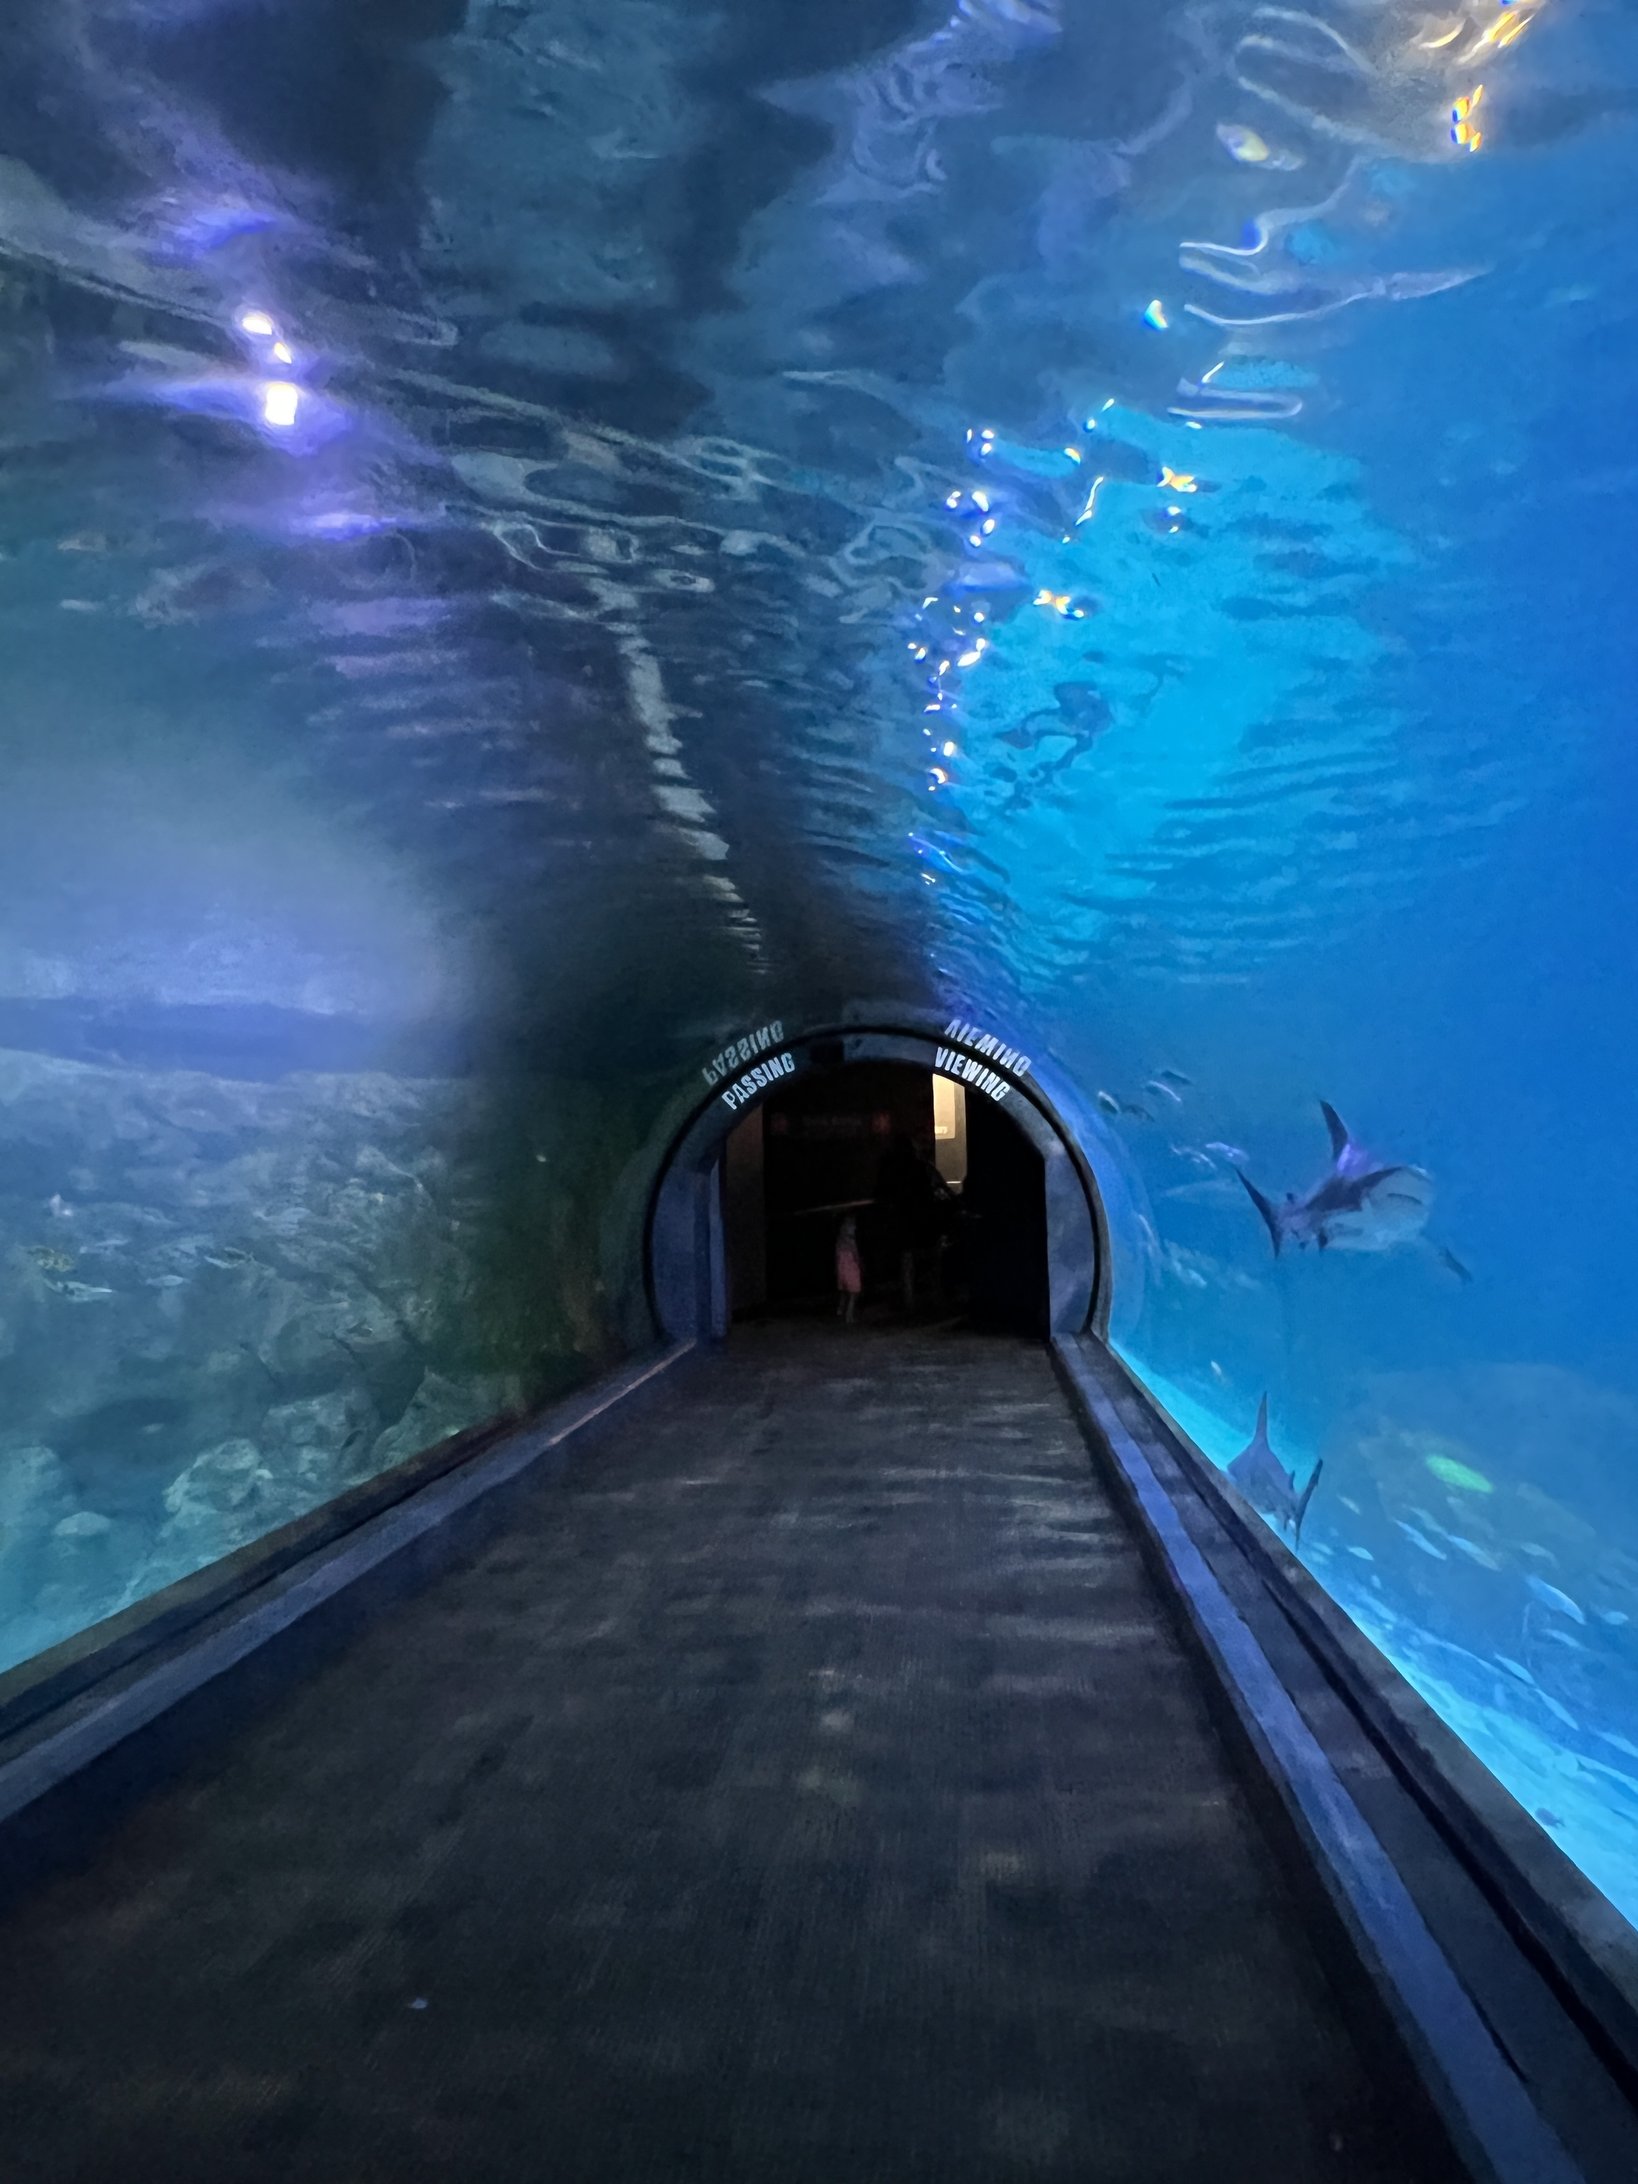 A Guide to Adventure Aquarium